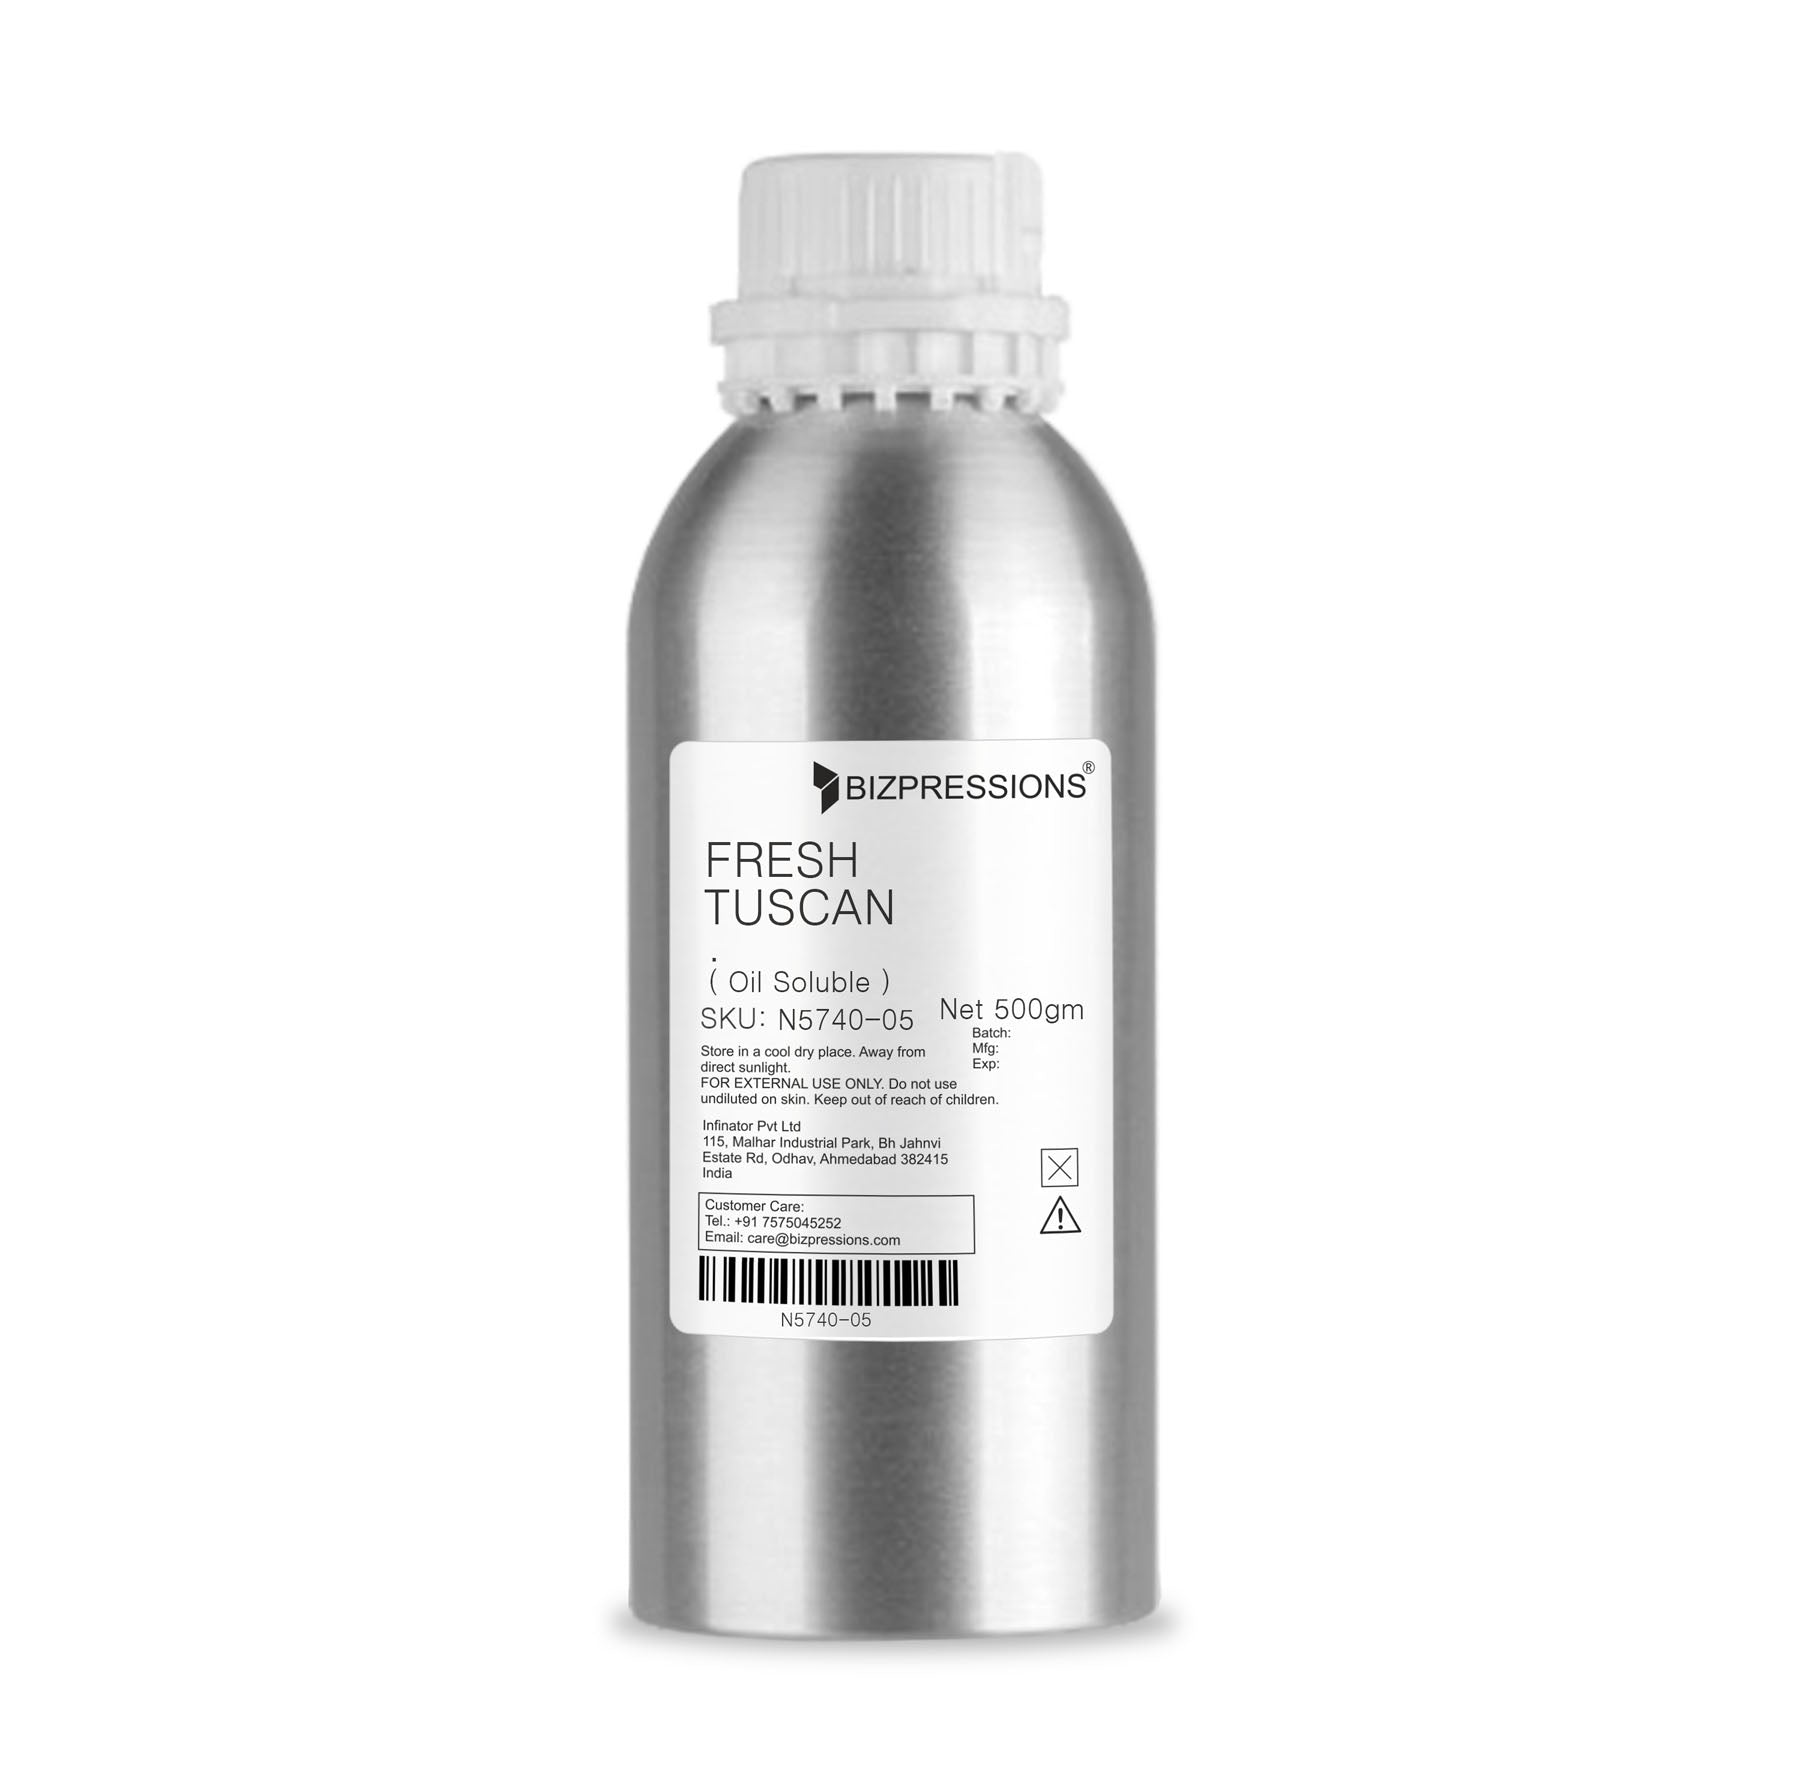 FRESH TUSCAN - Fragrance ( Oil Soluble ) - 500 gm